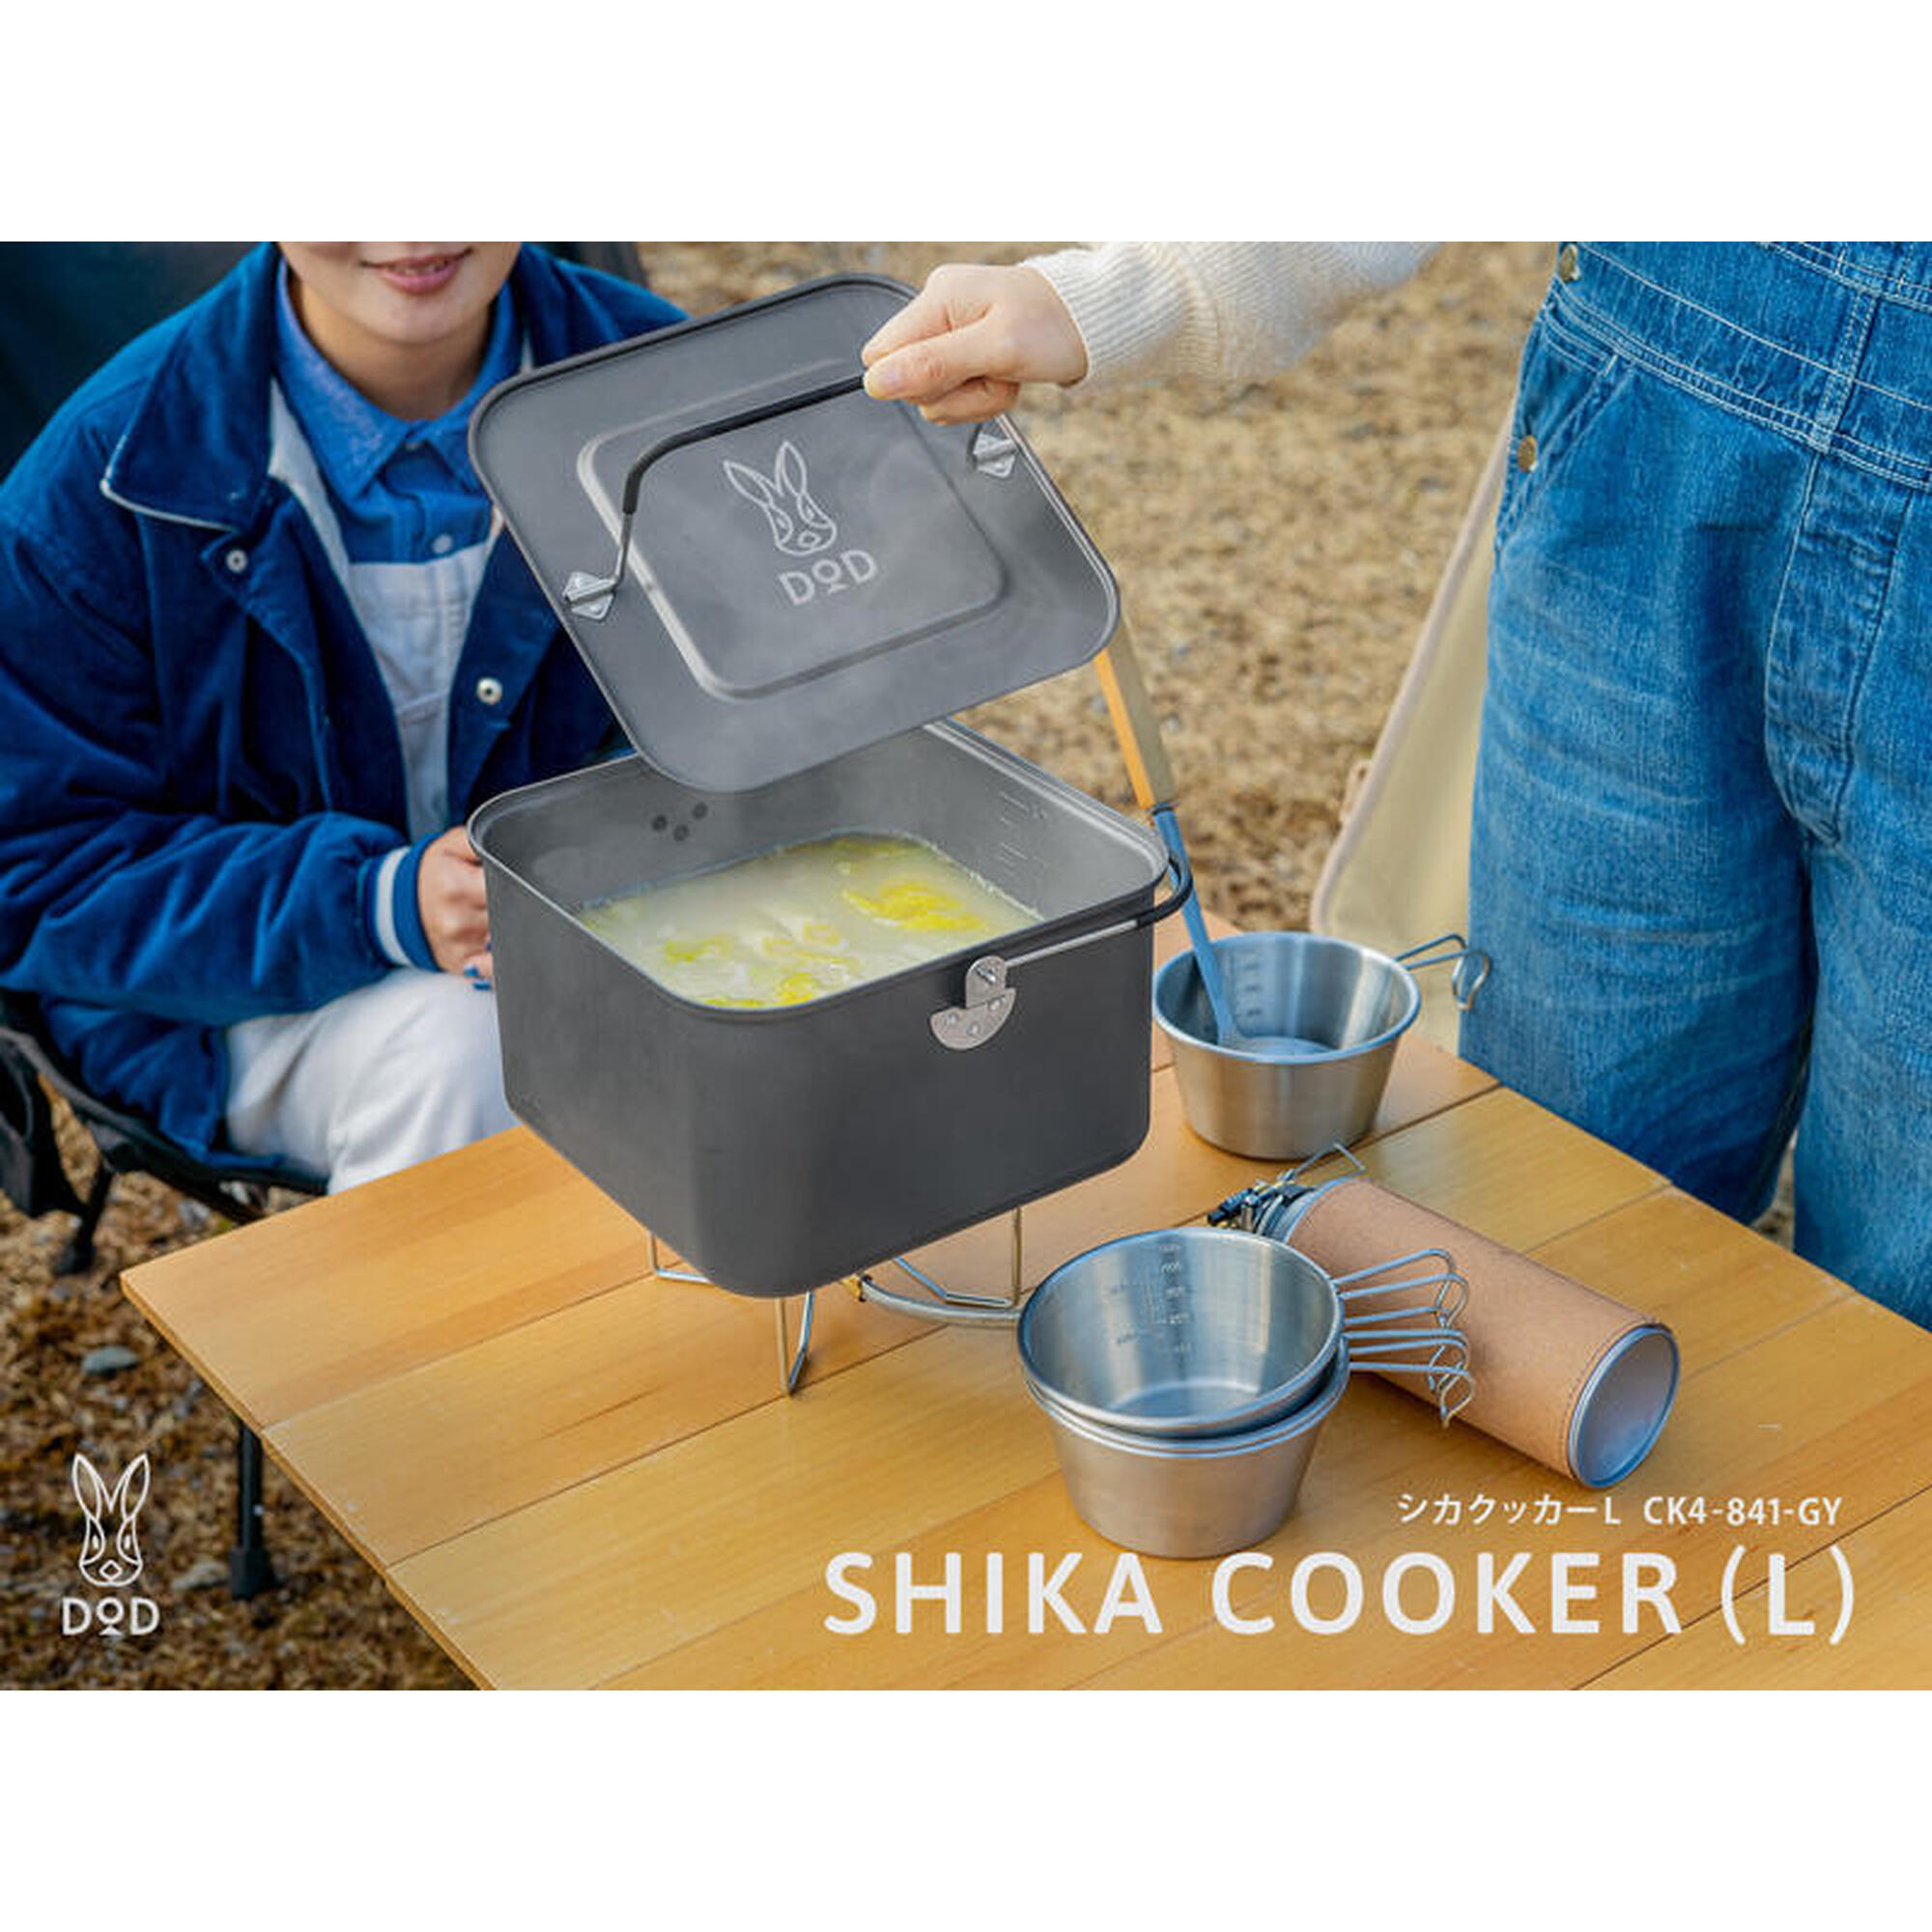 CK4-841-GY Shika cooker (pot)